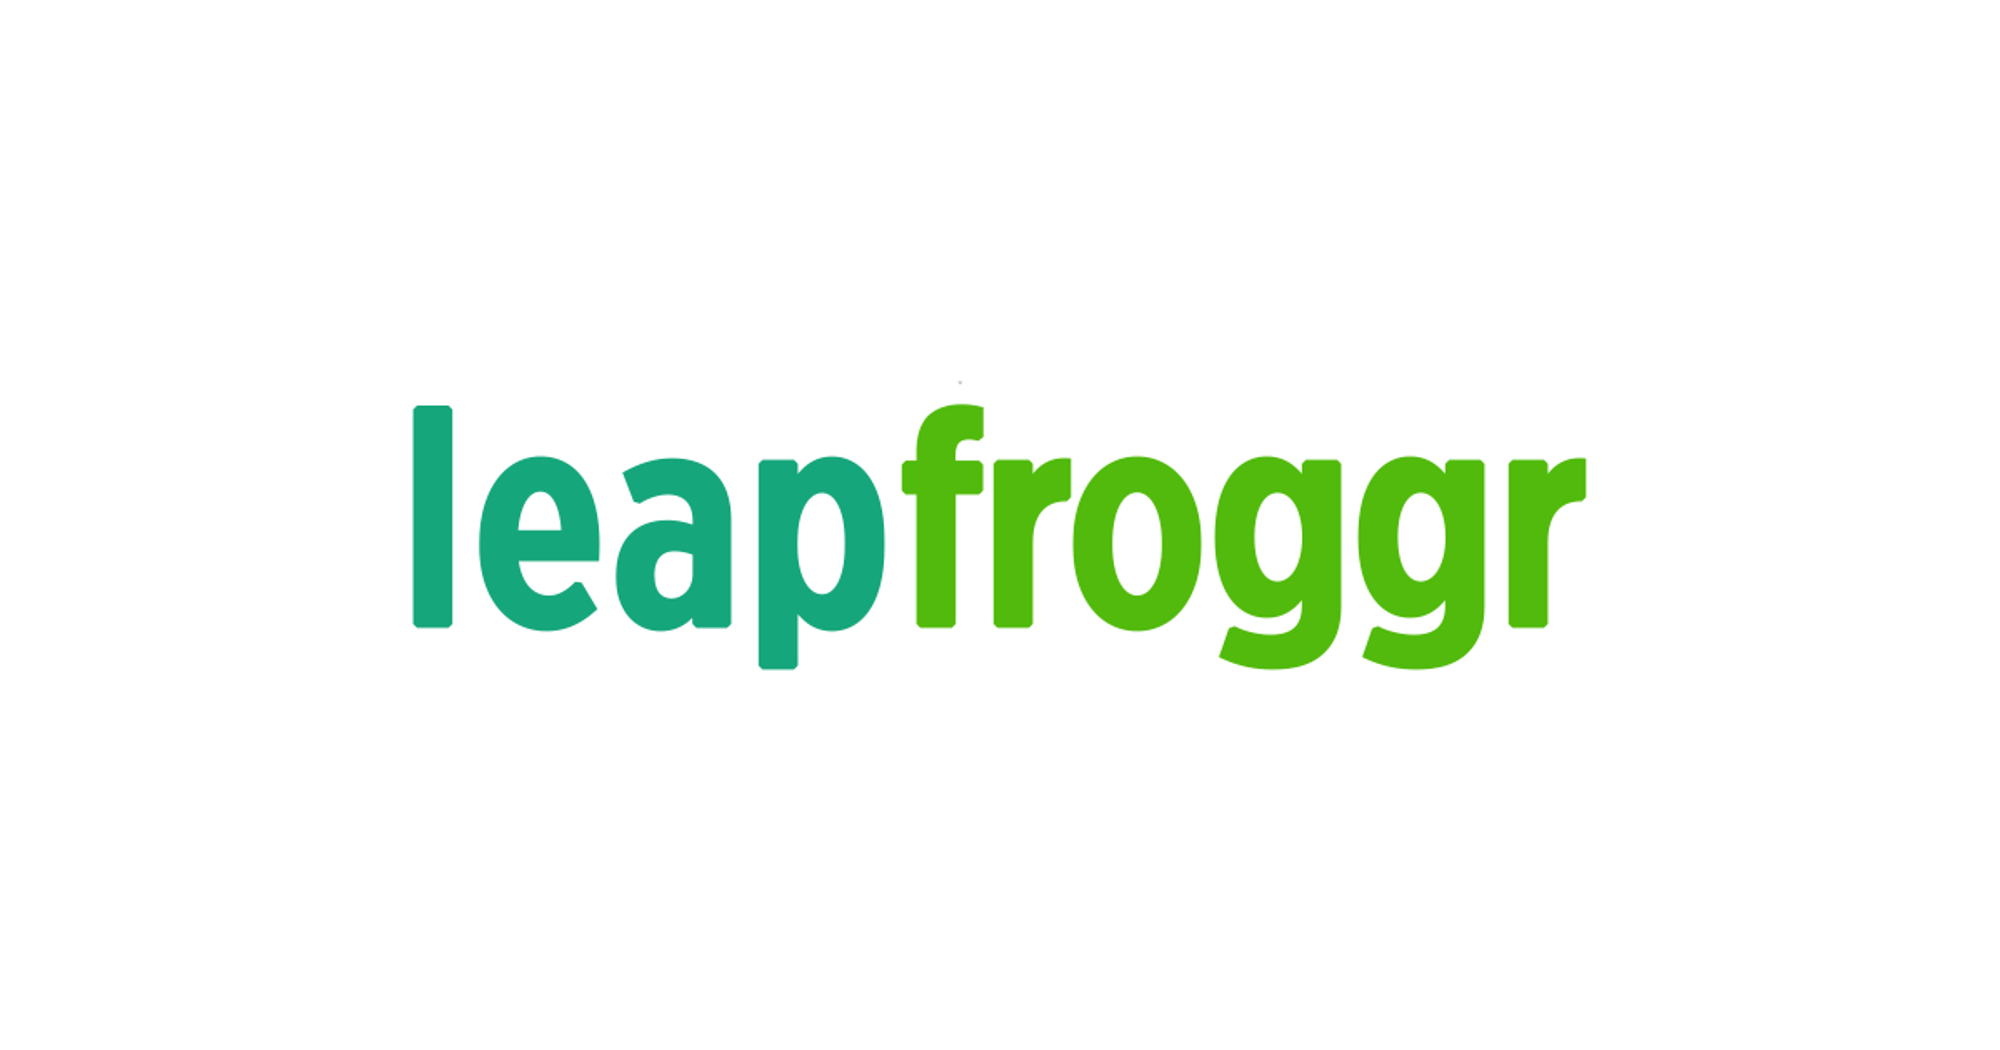 Content Writer at LeapFroggr Inc.